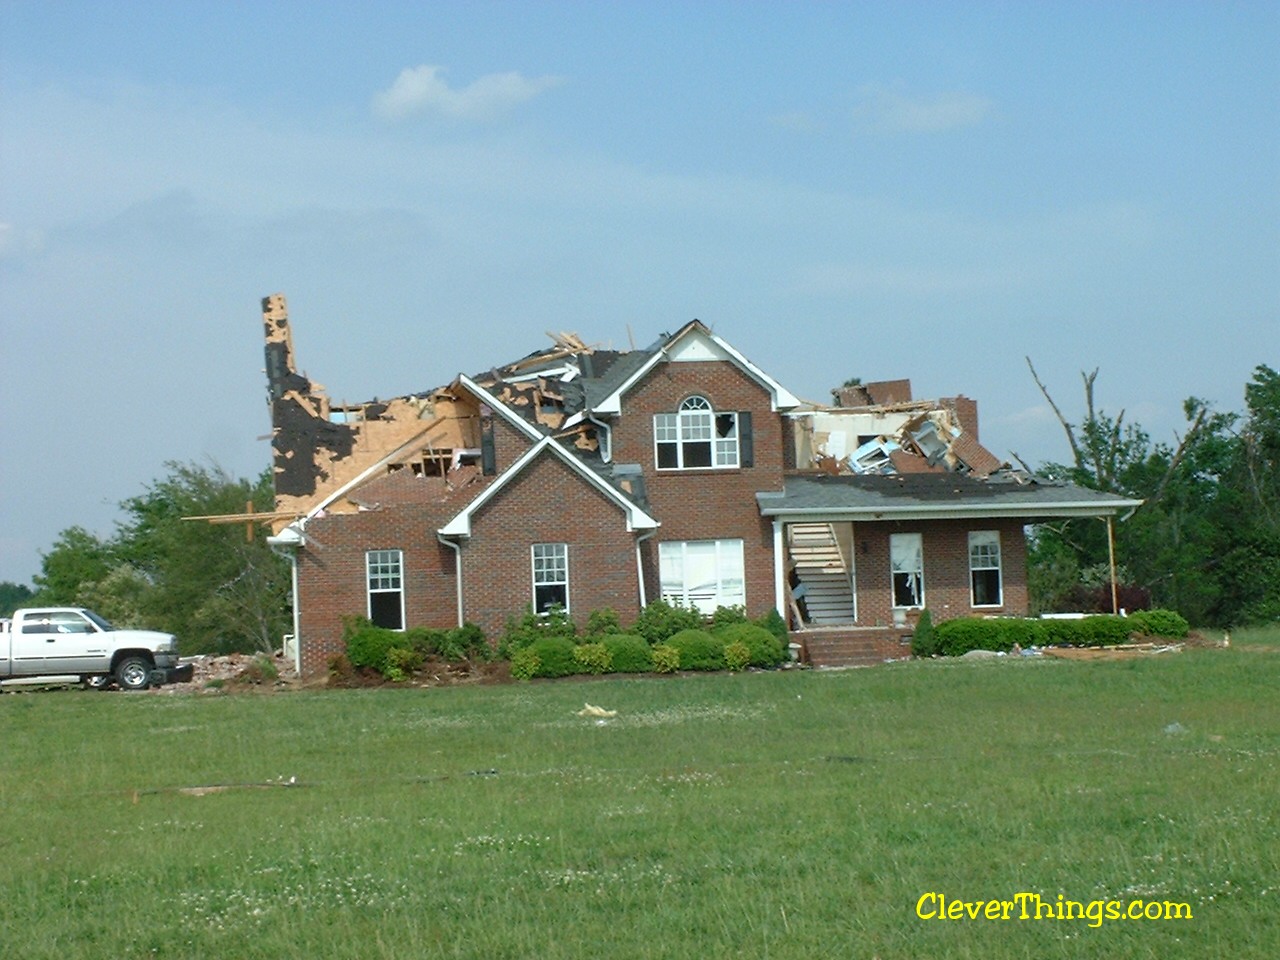 Tornado damage near Arab, Alabama